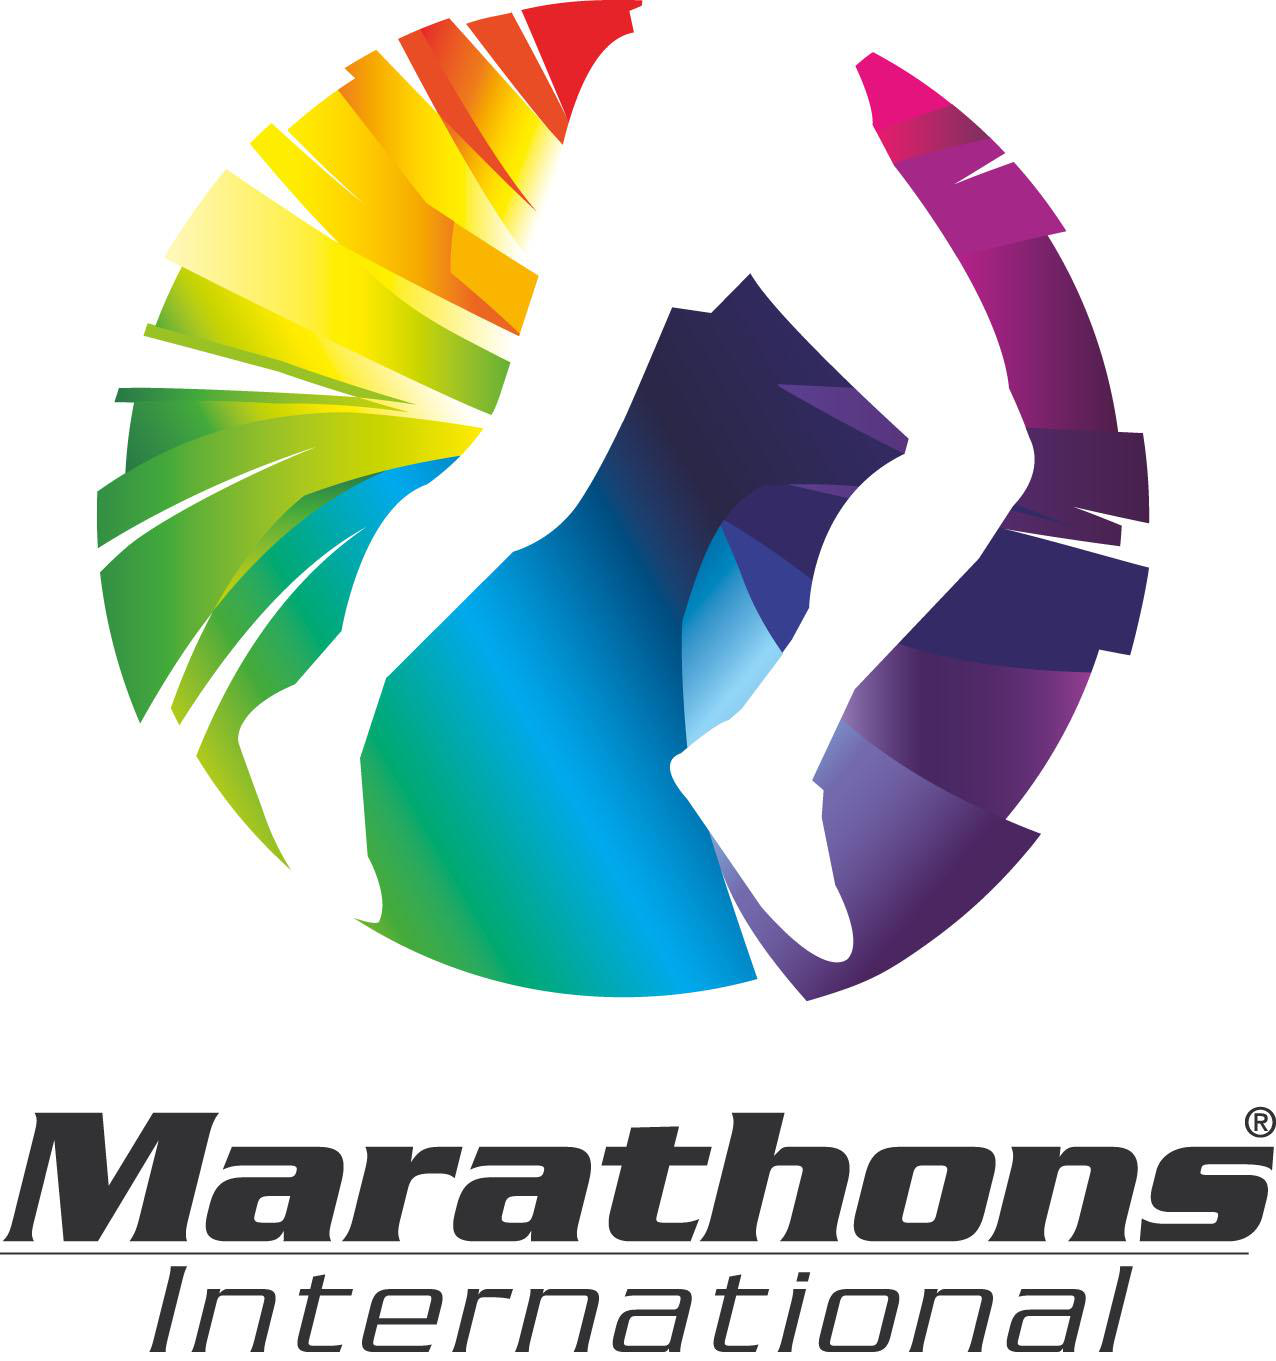 De marathon van Barcelona Logo